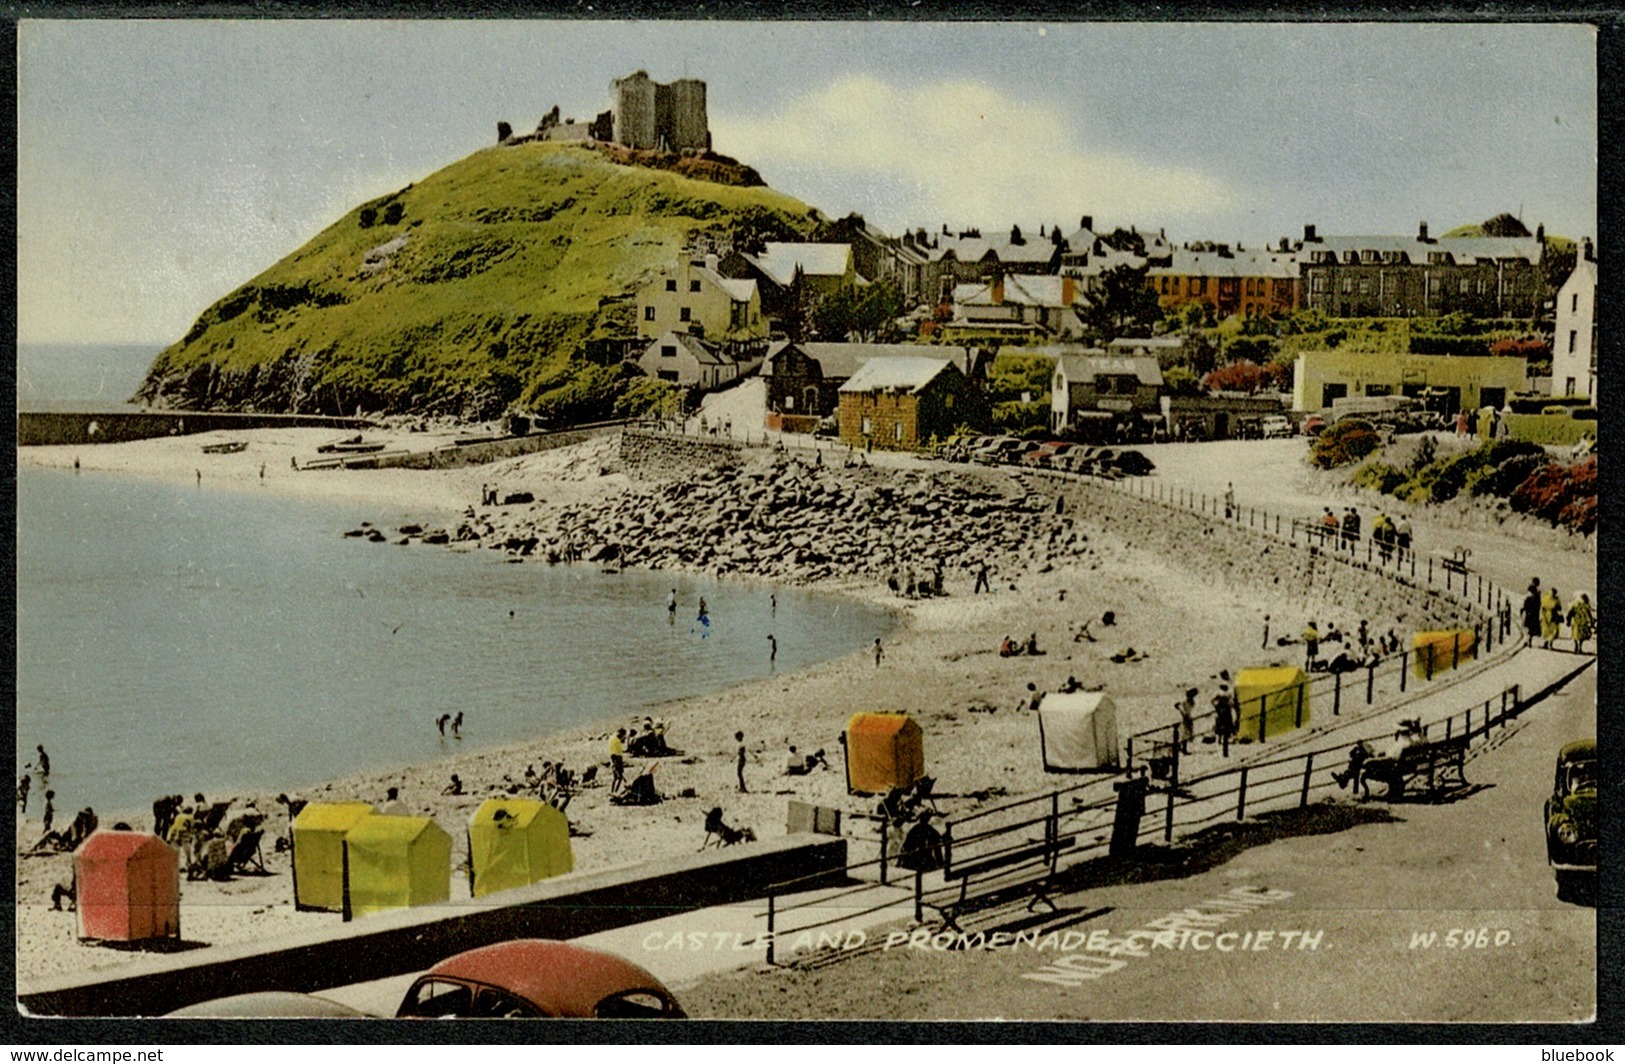 Ref 1293 - 1950's Postcard - Castle & Promenade Criccieth Caernarvonshire Wales - Caernarvonshire